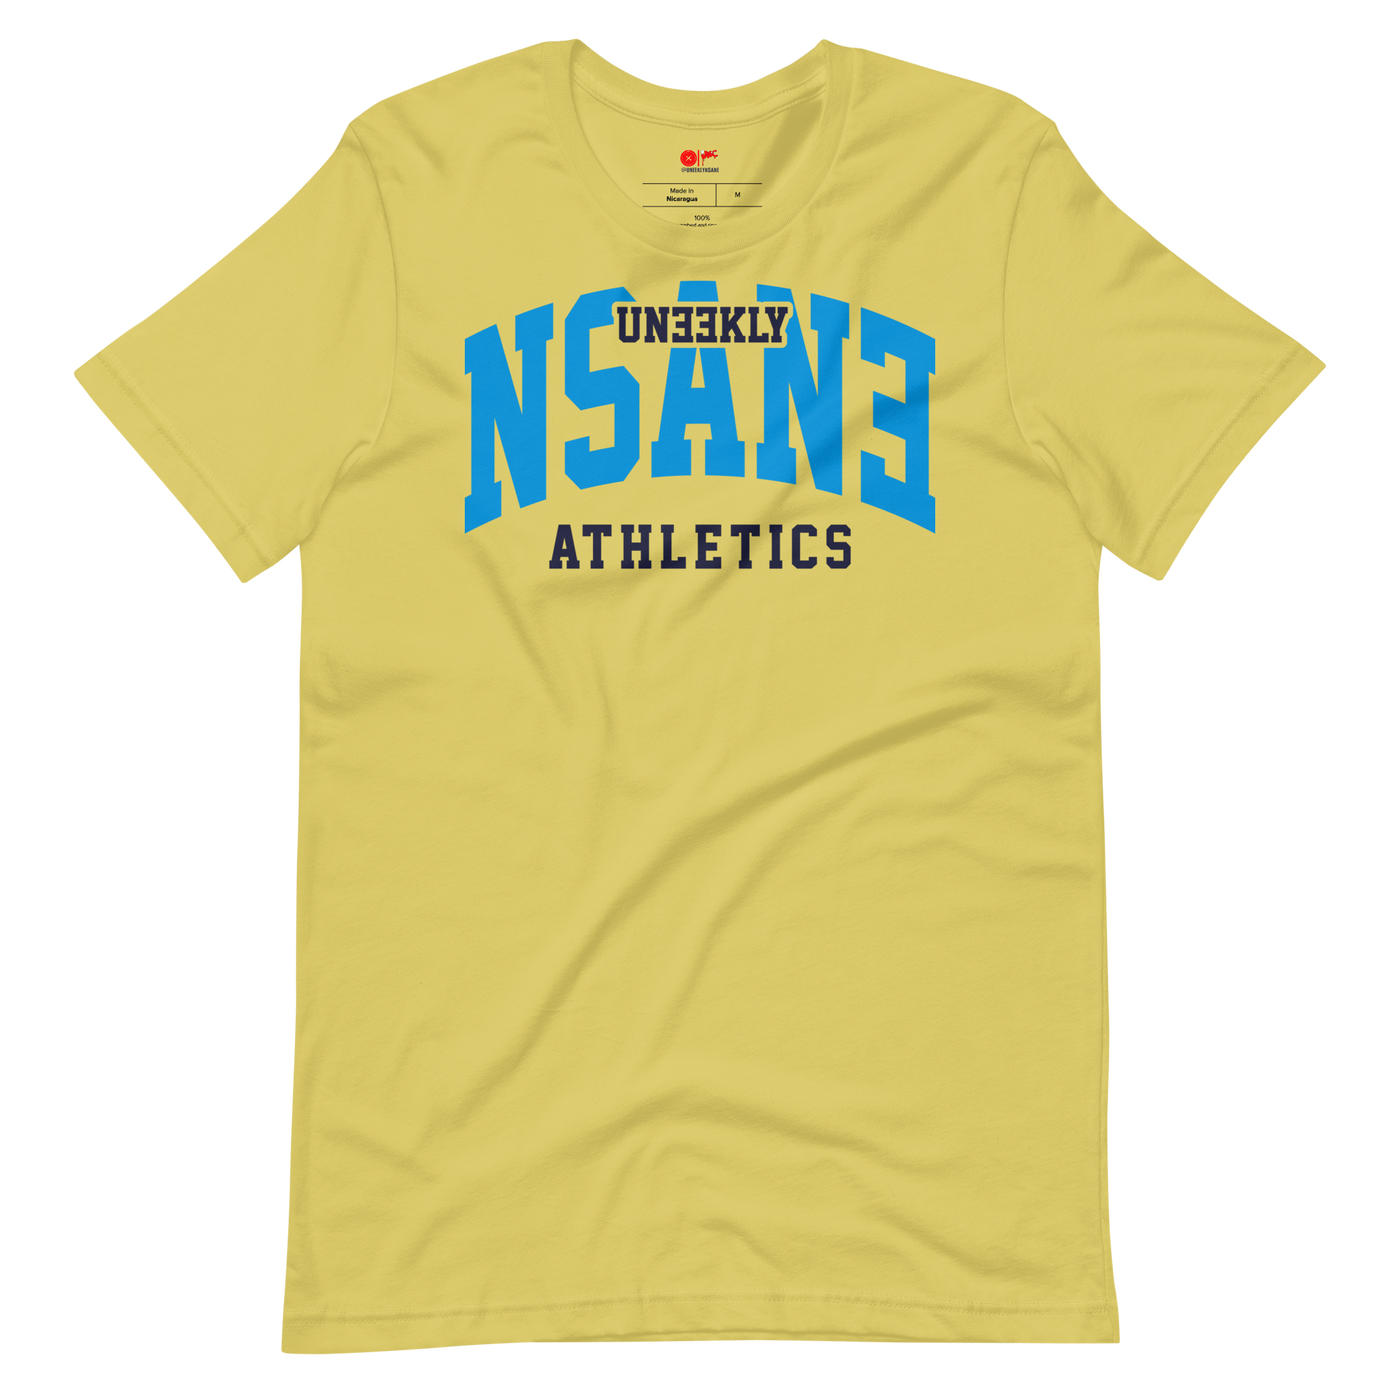 Nsane Athletics T-Shirt (University blue) - Unique Sweatsuits, hats, tees, shorts, hoodies, Outwear & accessories online | Uneekly Nsane